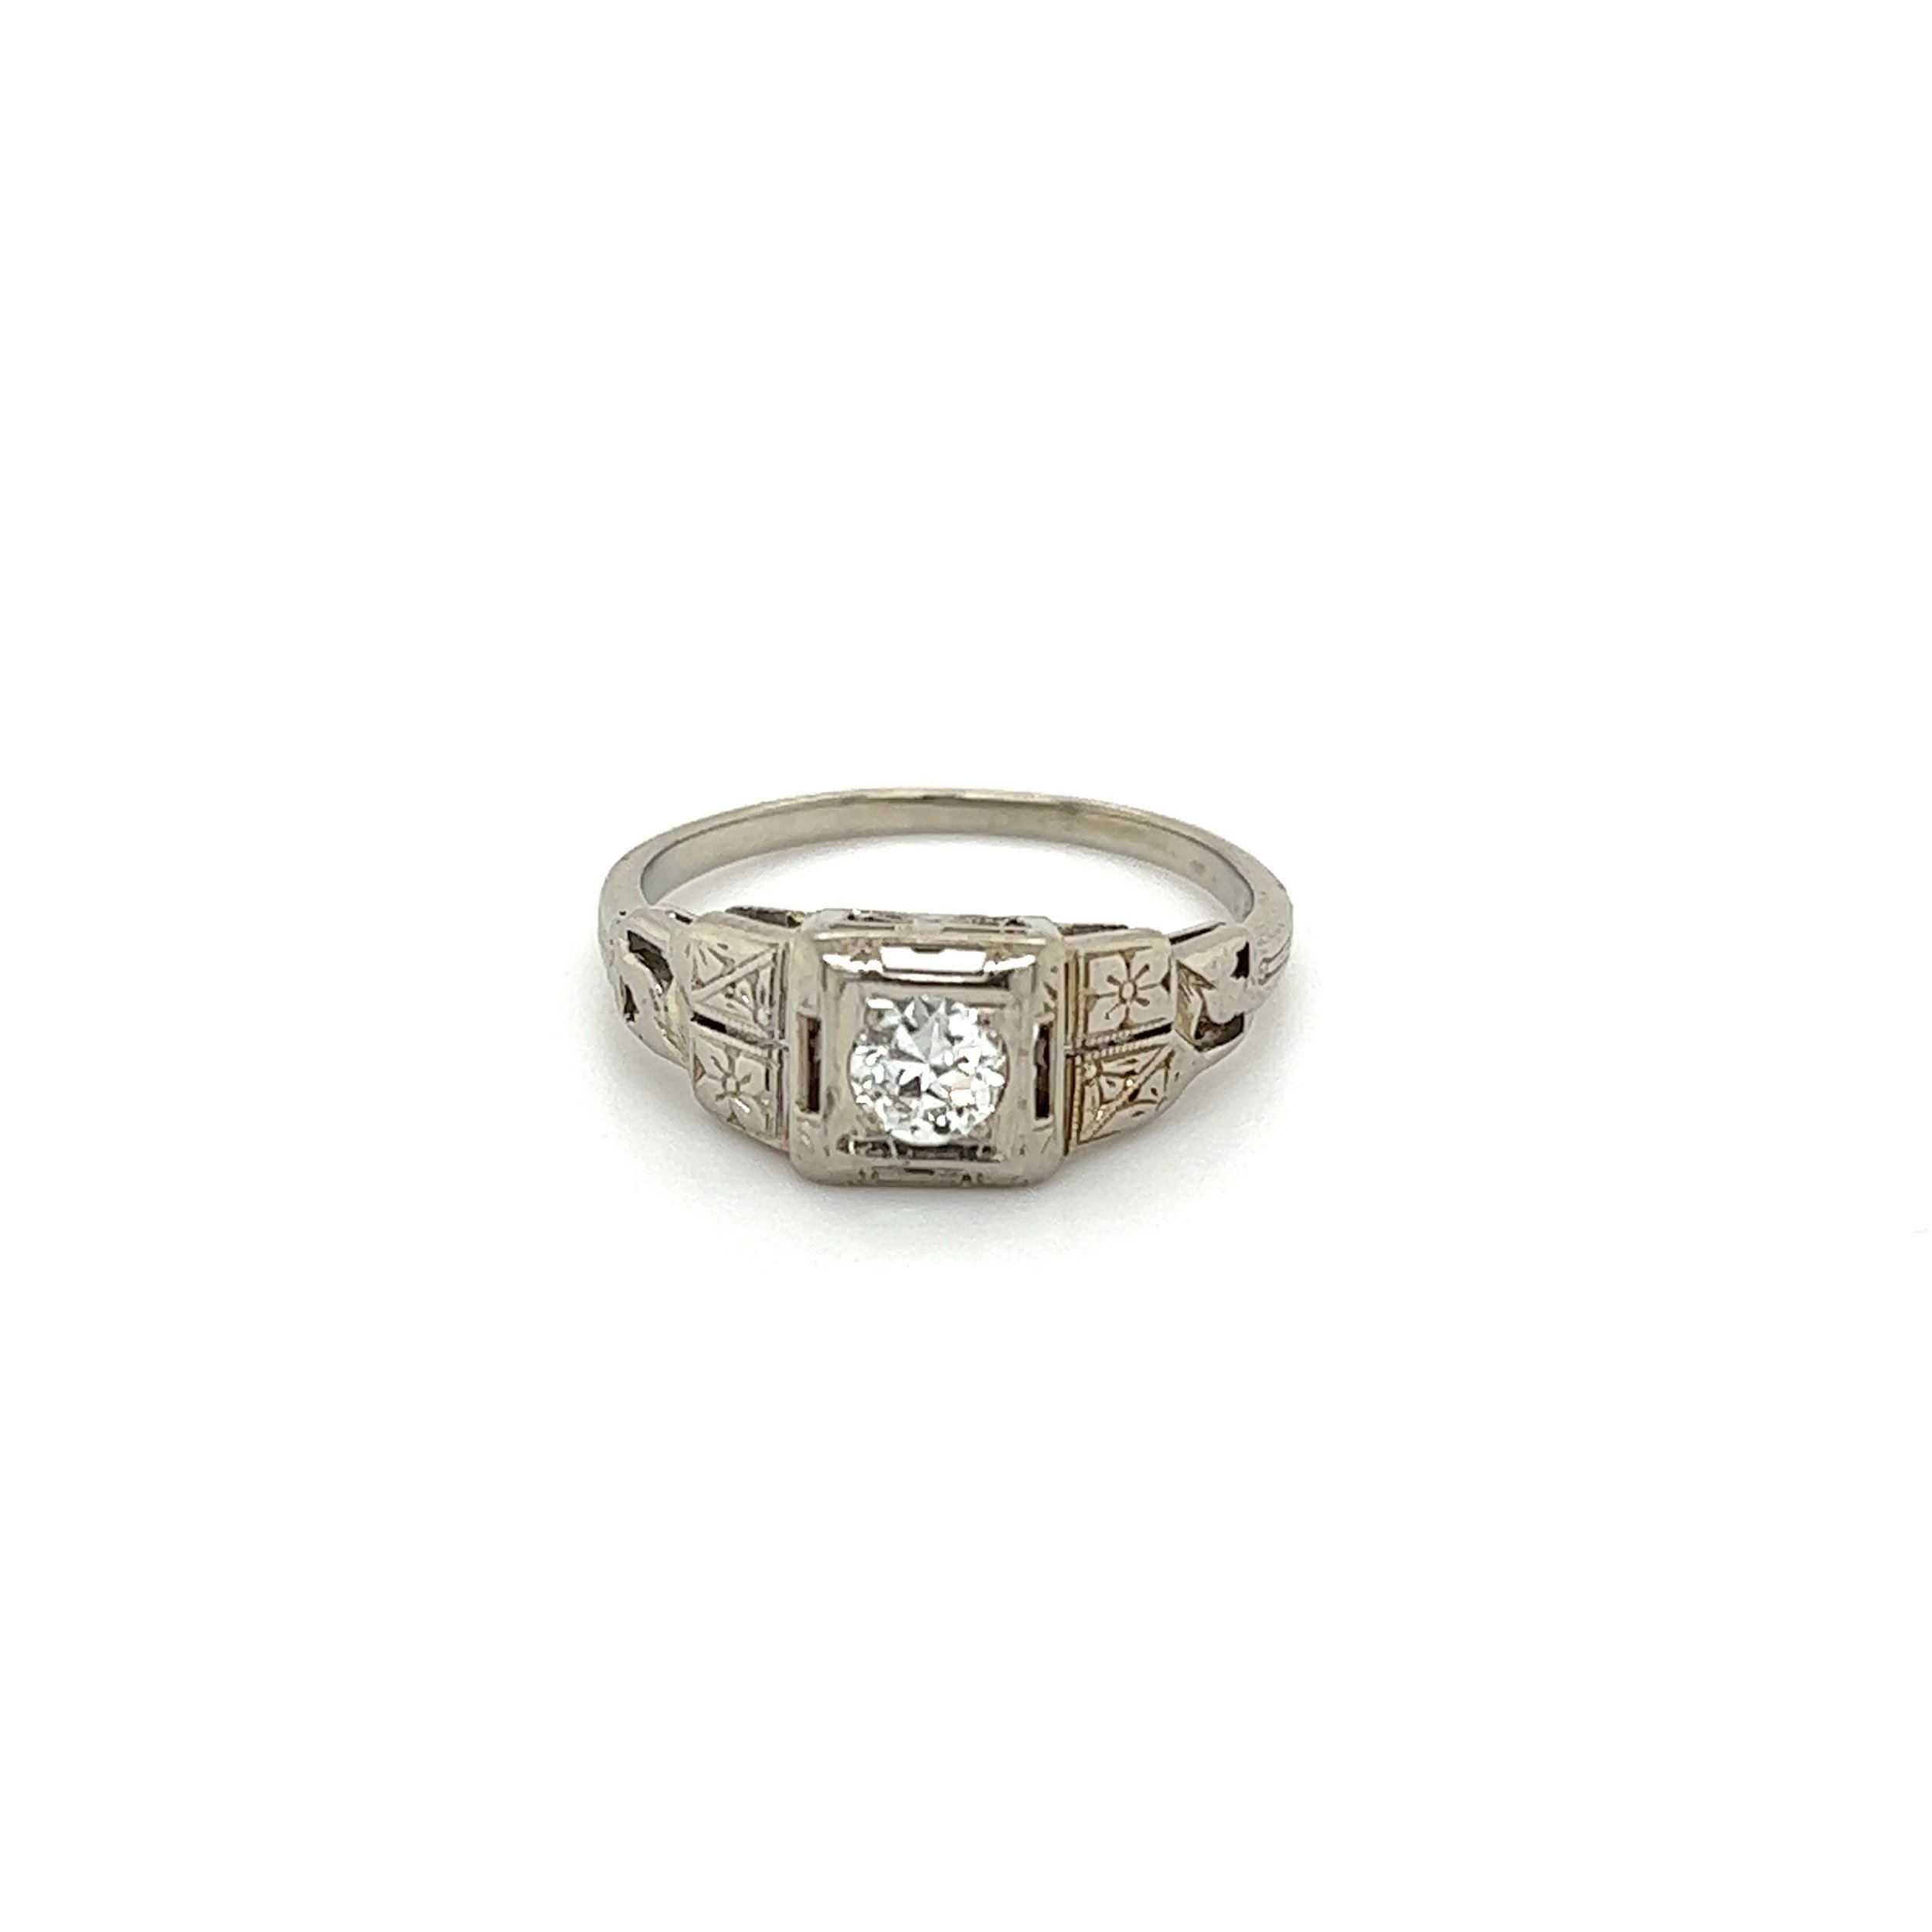 18K WG Art Deco .24ct Old European Cut Diamond Filigree Ring 2.4g, s6